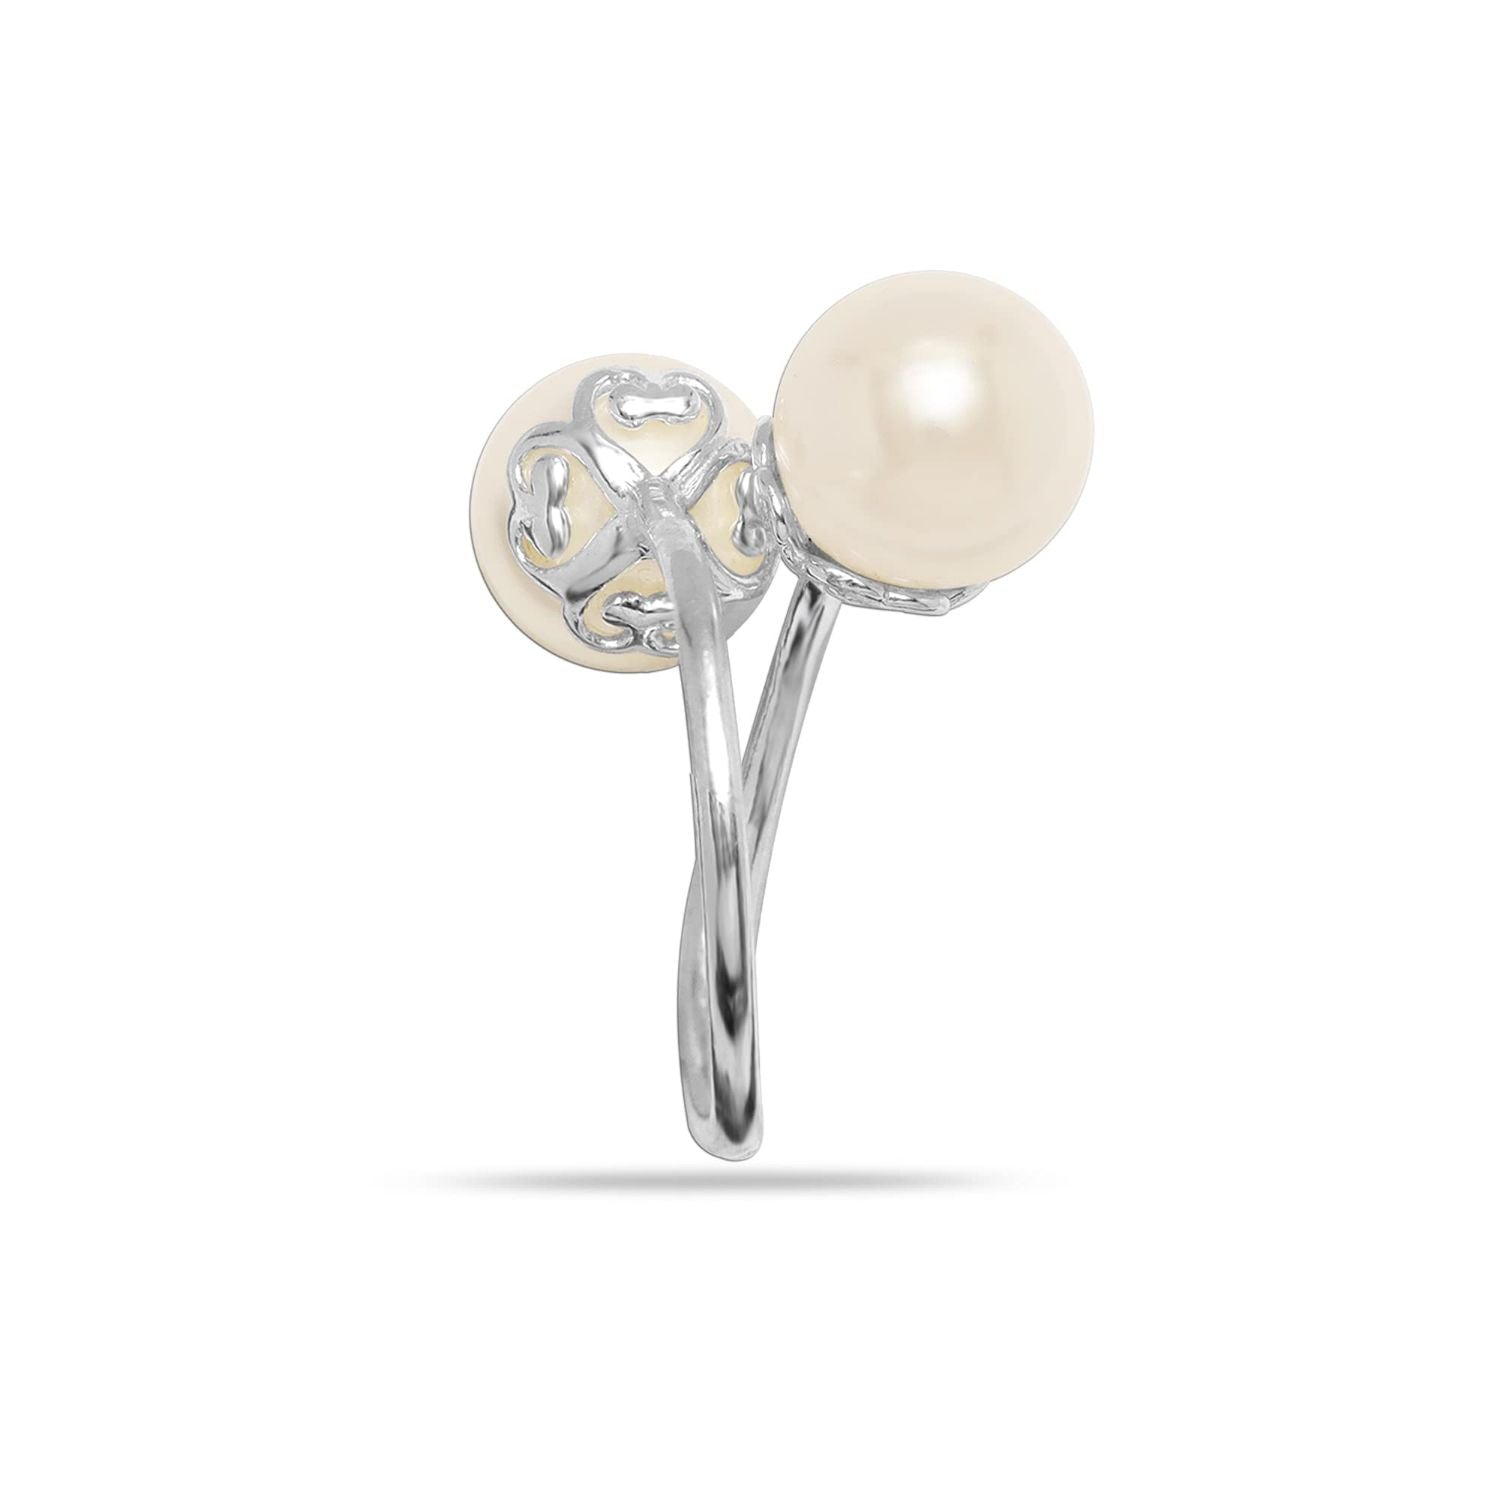 925 Sterling Silver Double Pearl Heart Design Finger Rings for Women